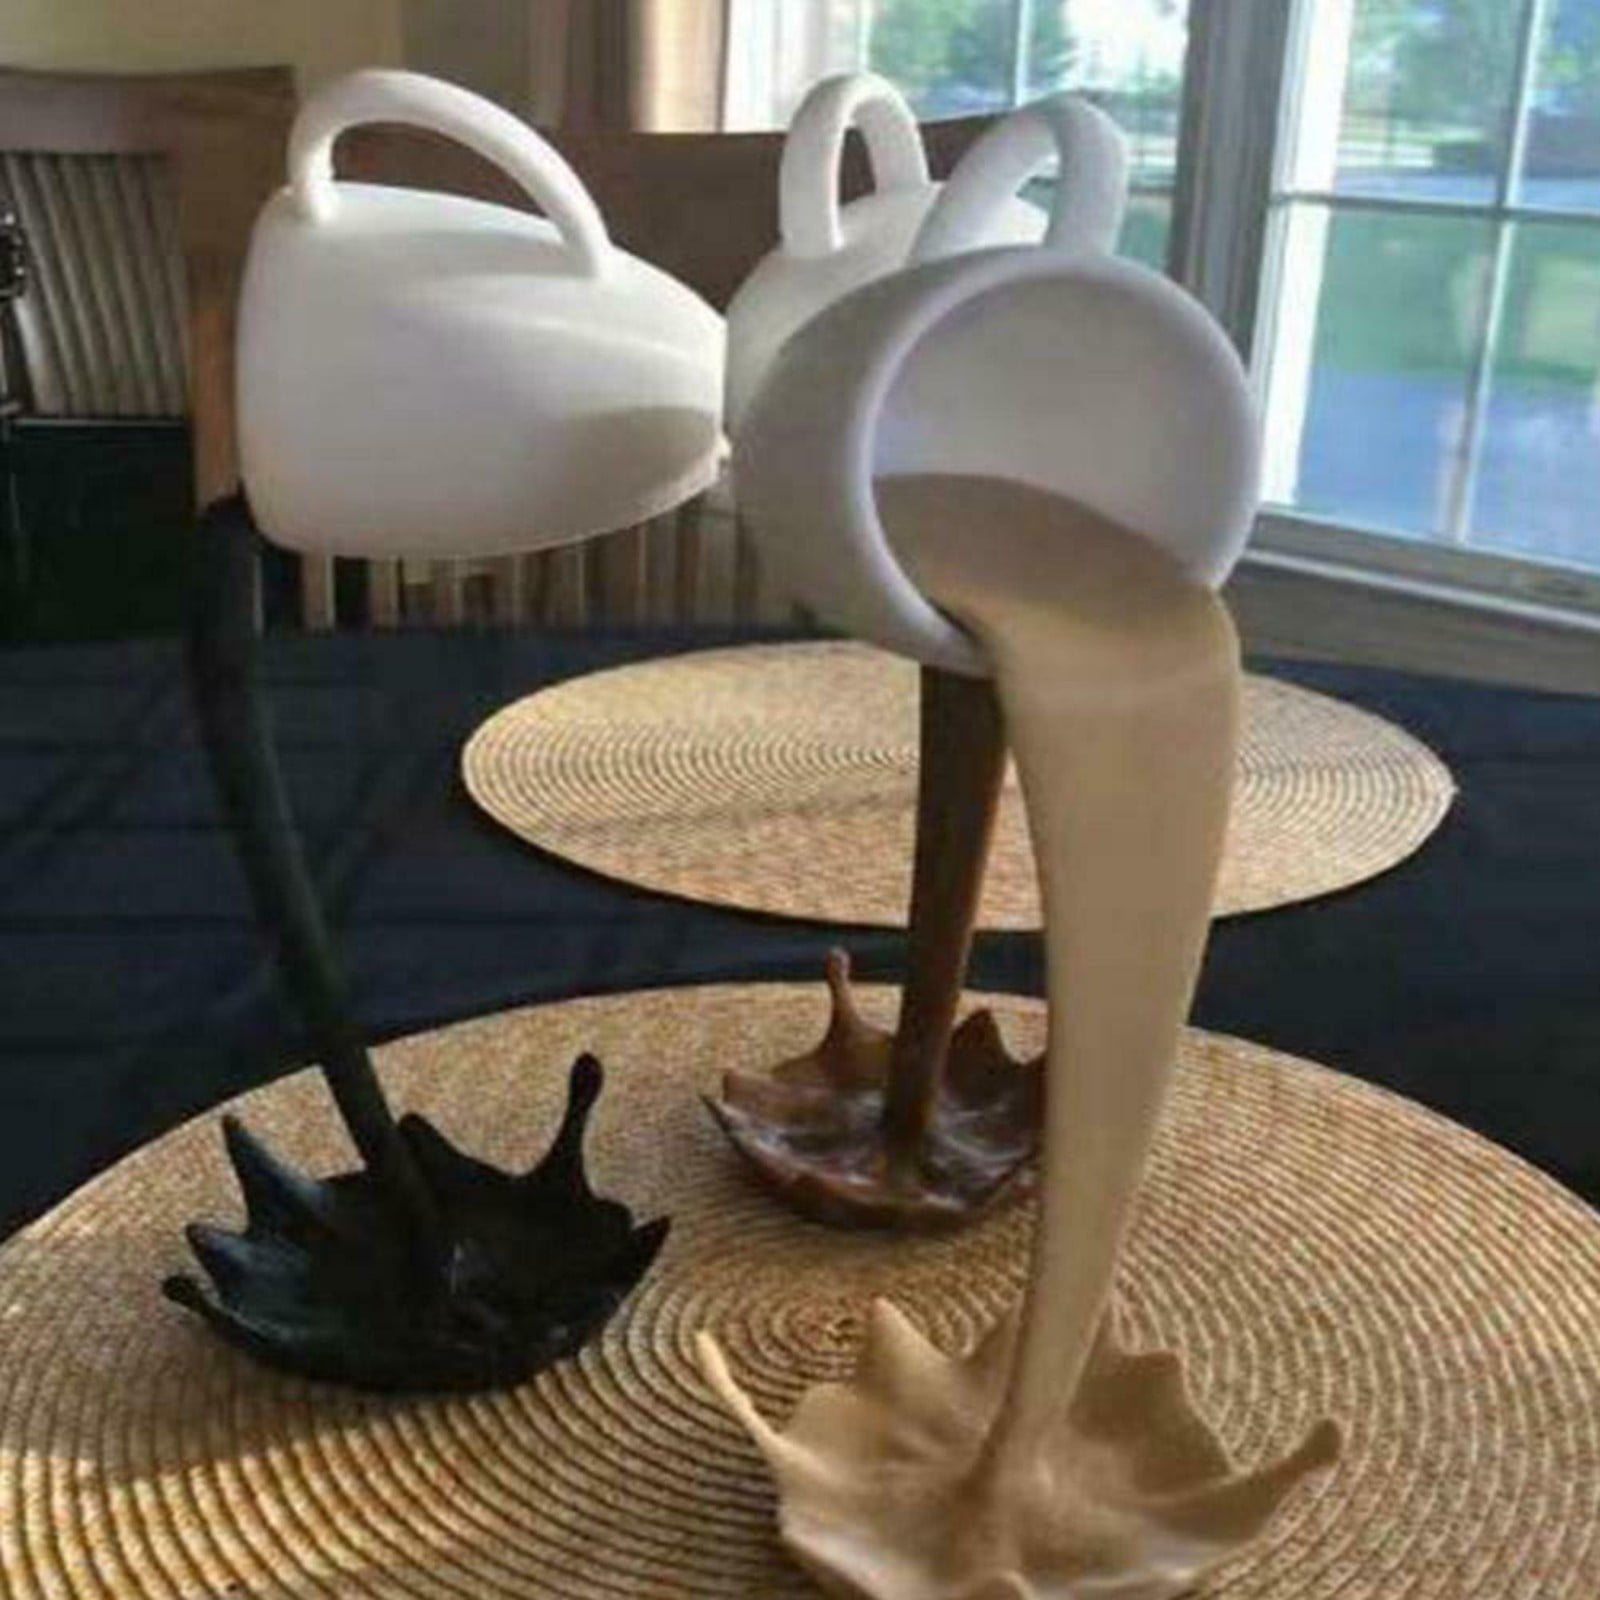 Jetec Floating Coffee Cup Mug Sculpture Mini Spilling Pouring Coffee Cup  Sculpture Accessories Funny…See more Jetec Floating Coffee Cup Mug  Sculpture